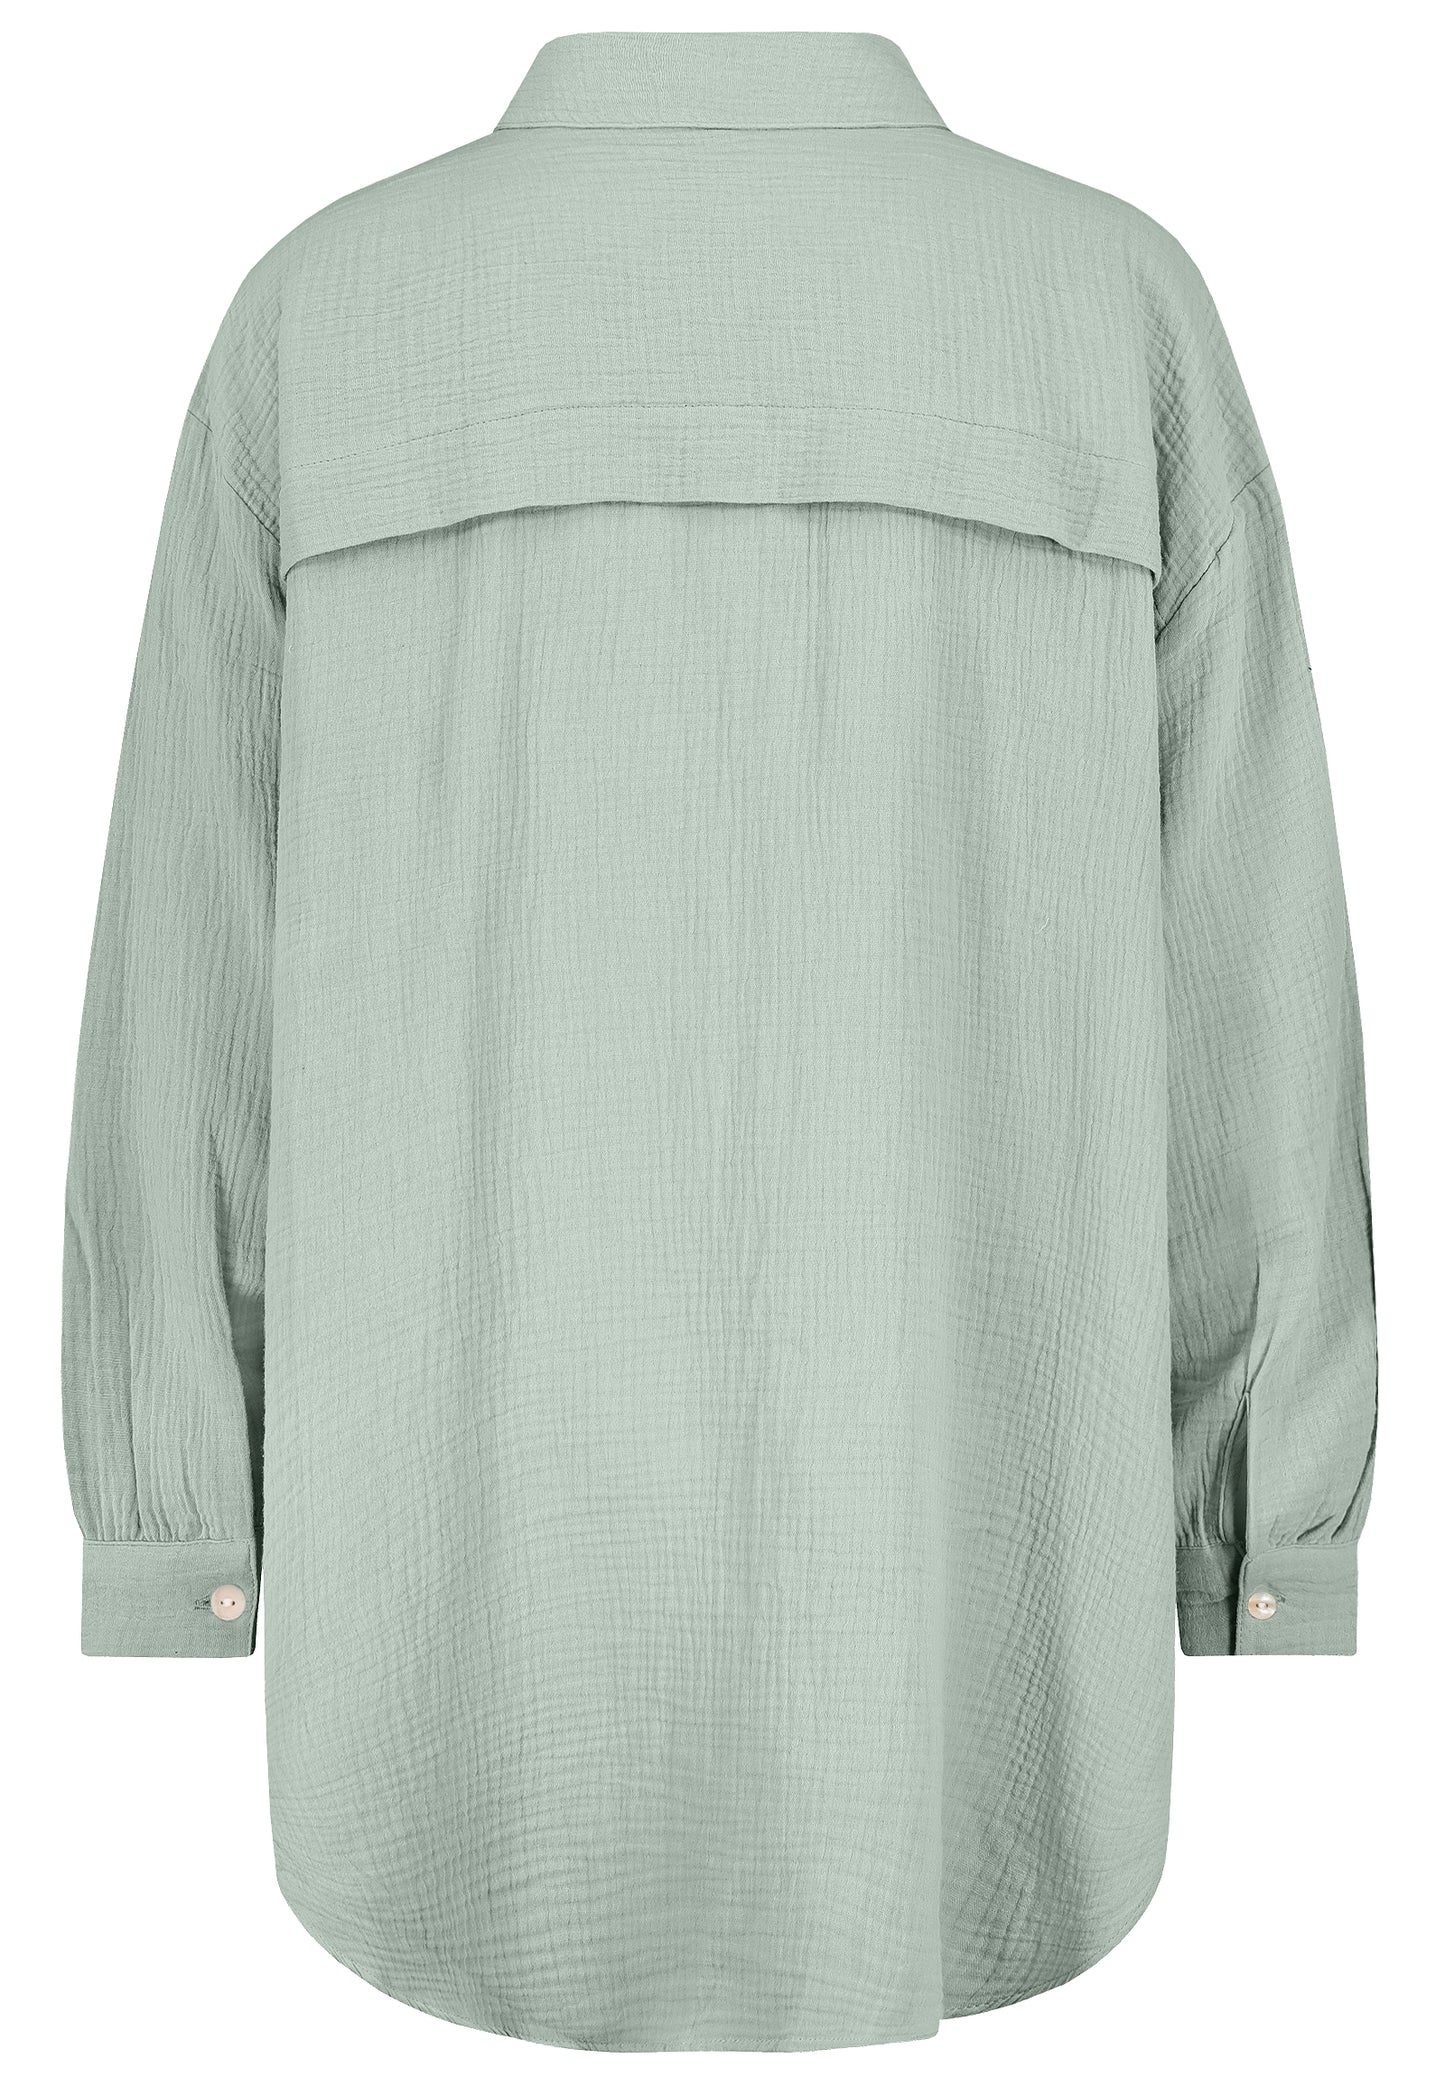 DOB LONG-Bluse, Oversize, überschni, jadeite green